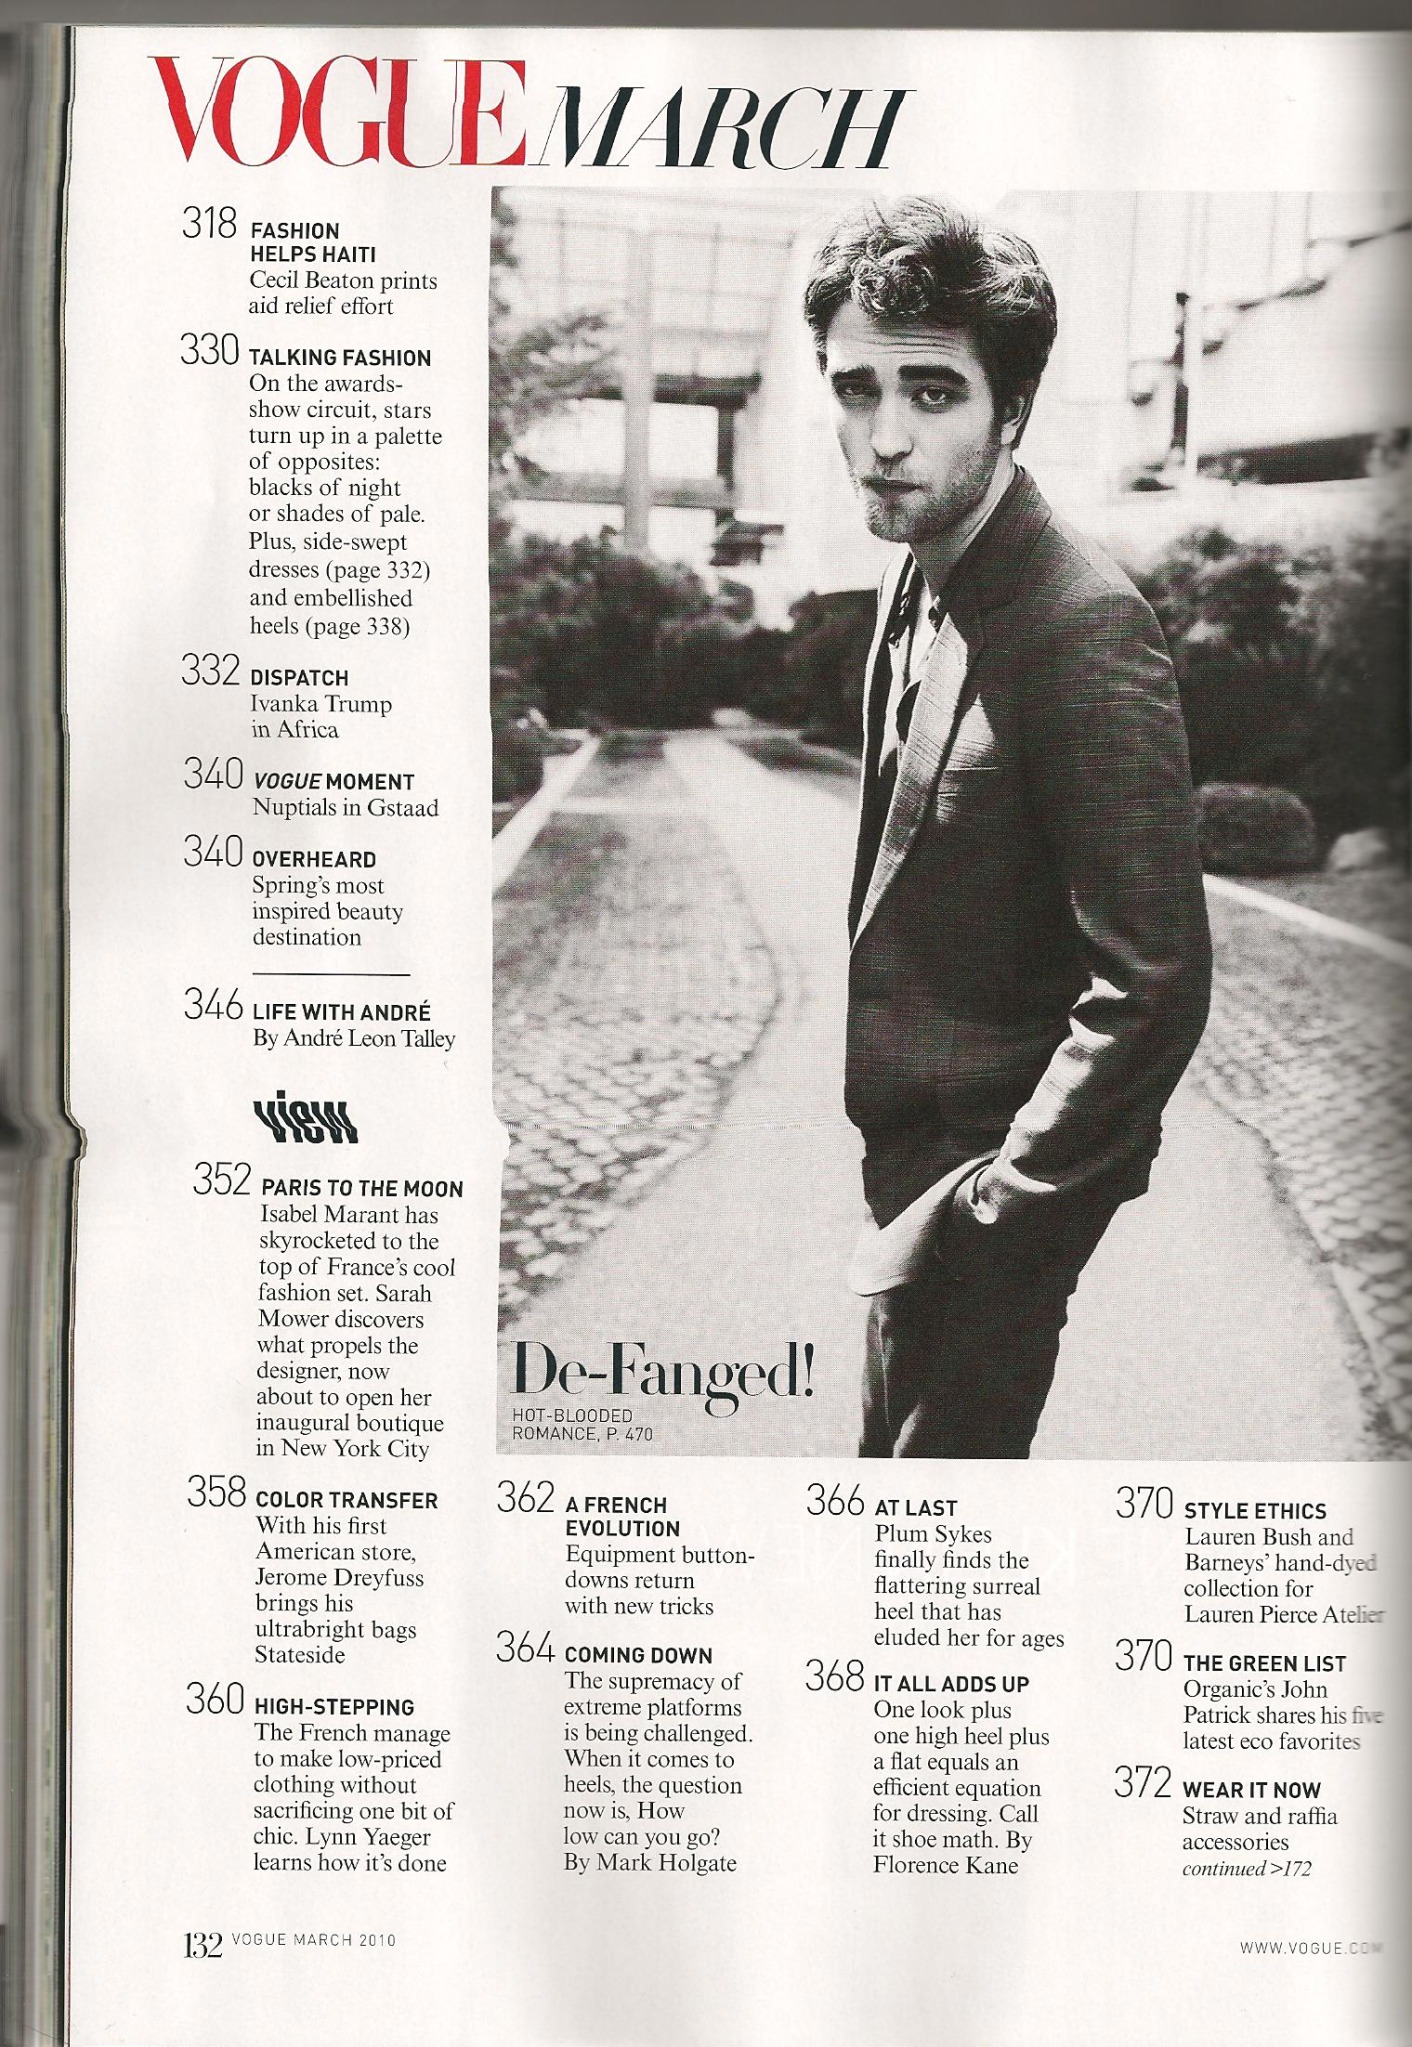 Robert Pattinson in Gorgeous New Vogue Magazine Photoshoot | twilightobsession4ever